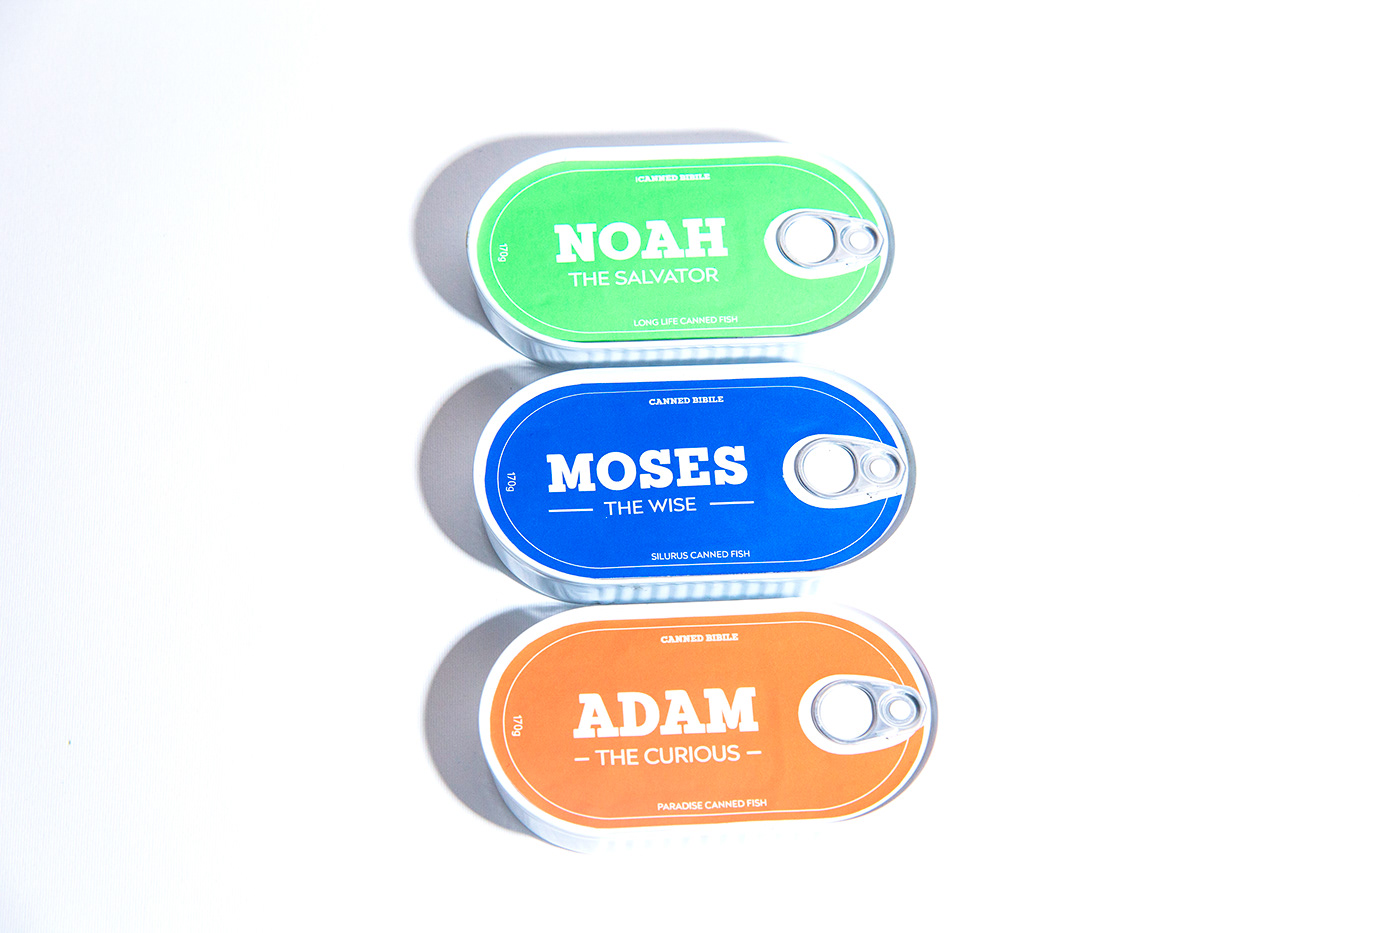 canned fish bible cannedfish Packaging Adam moses noah packagingdesign kolcsarzsolt